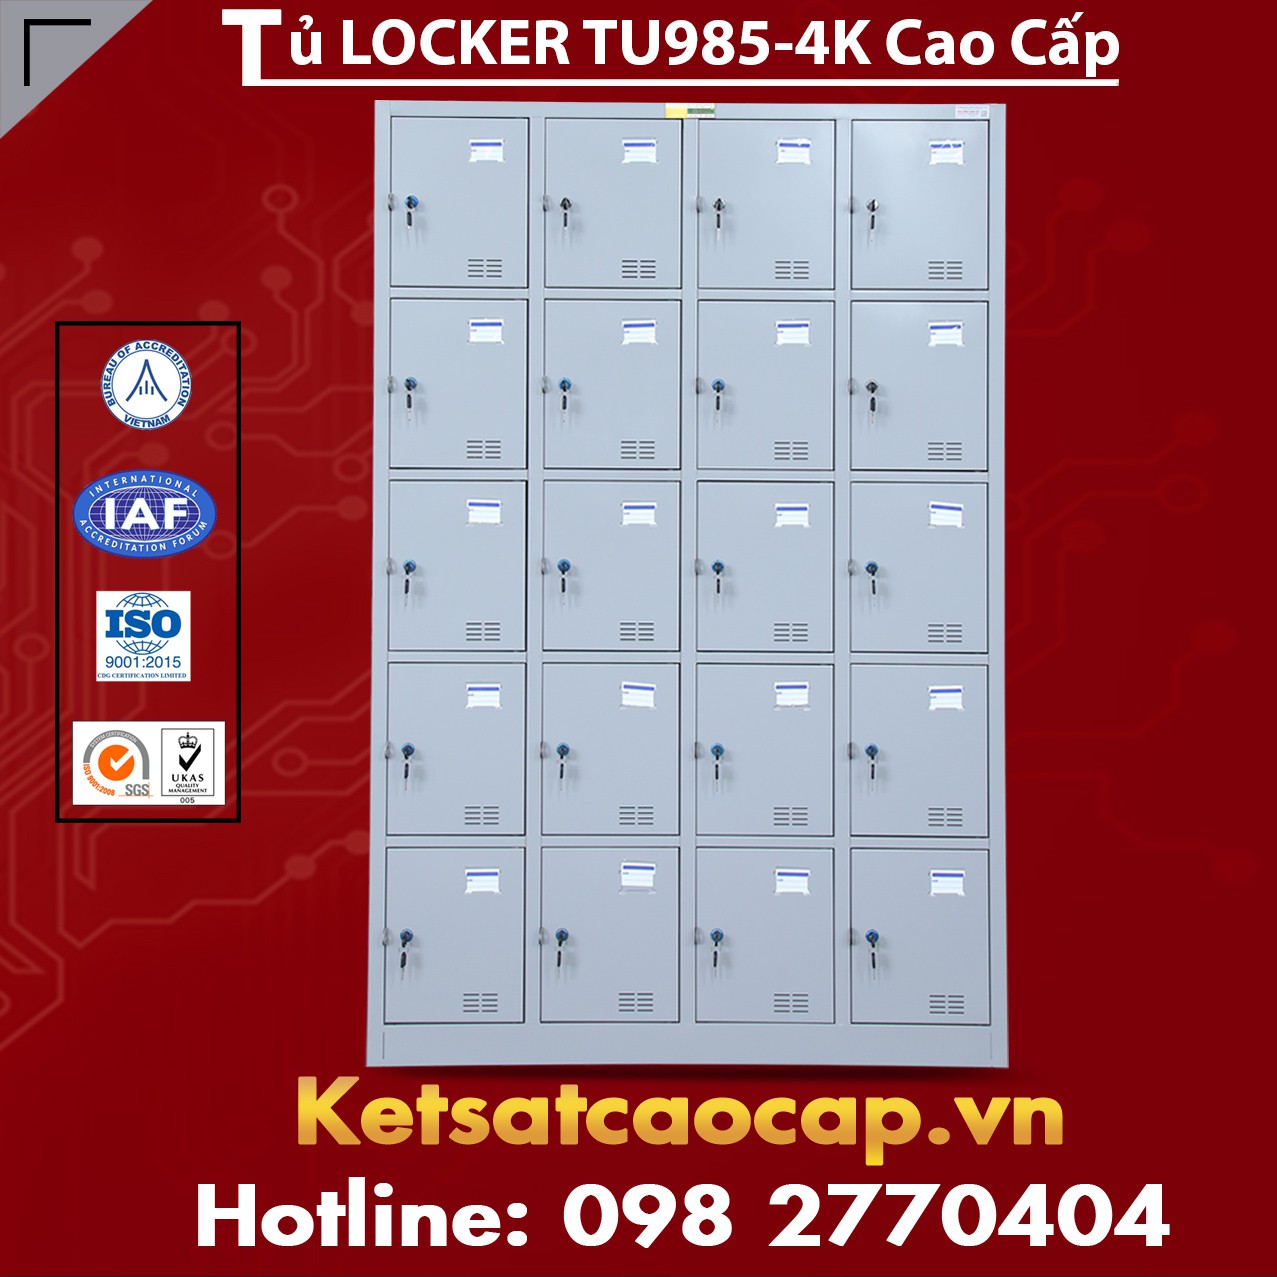 Tủ Locker TU985-4K Cao Cấp